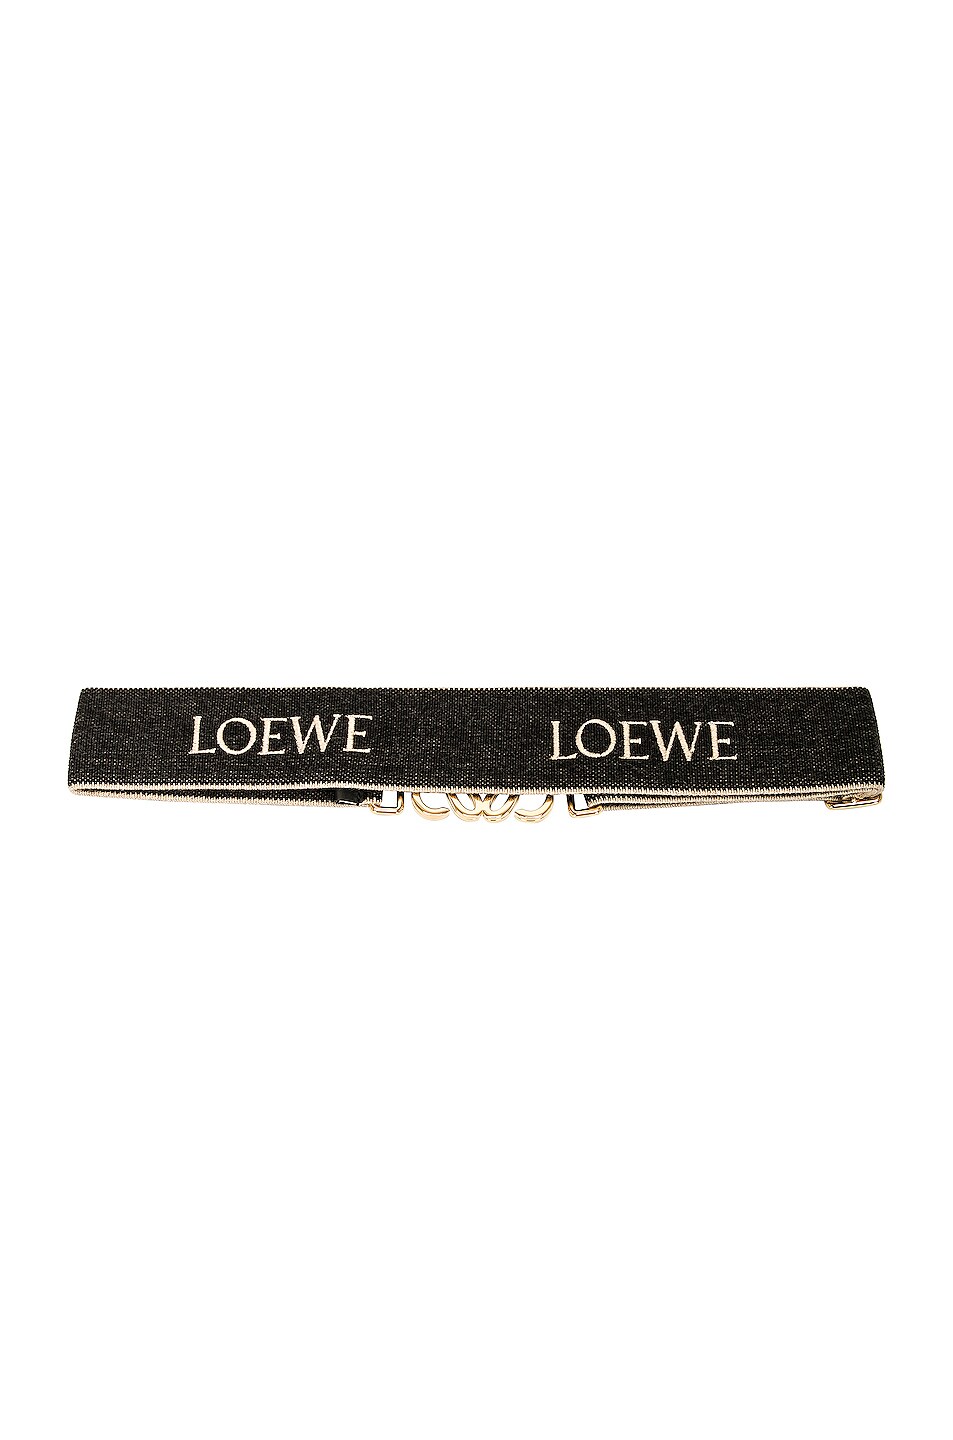 Loewe | Summer 2023 Collection | FWRD